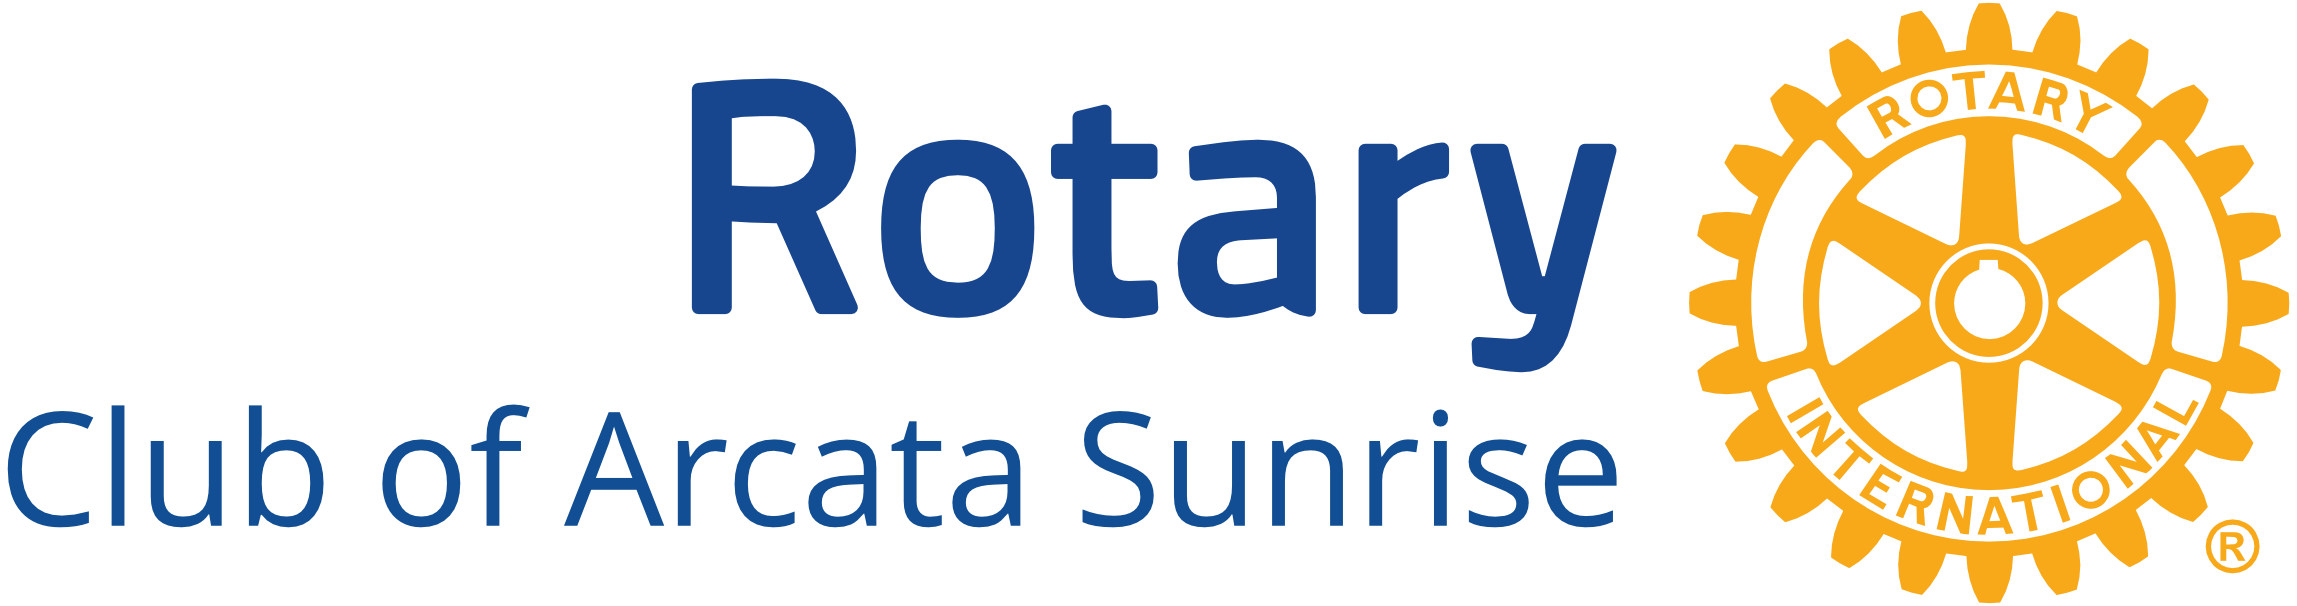 Arcata Sunrise Rotary design.png